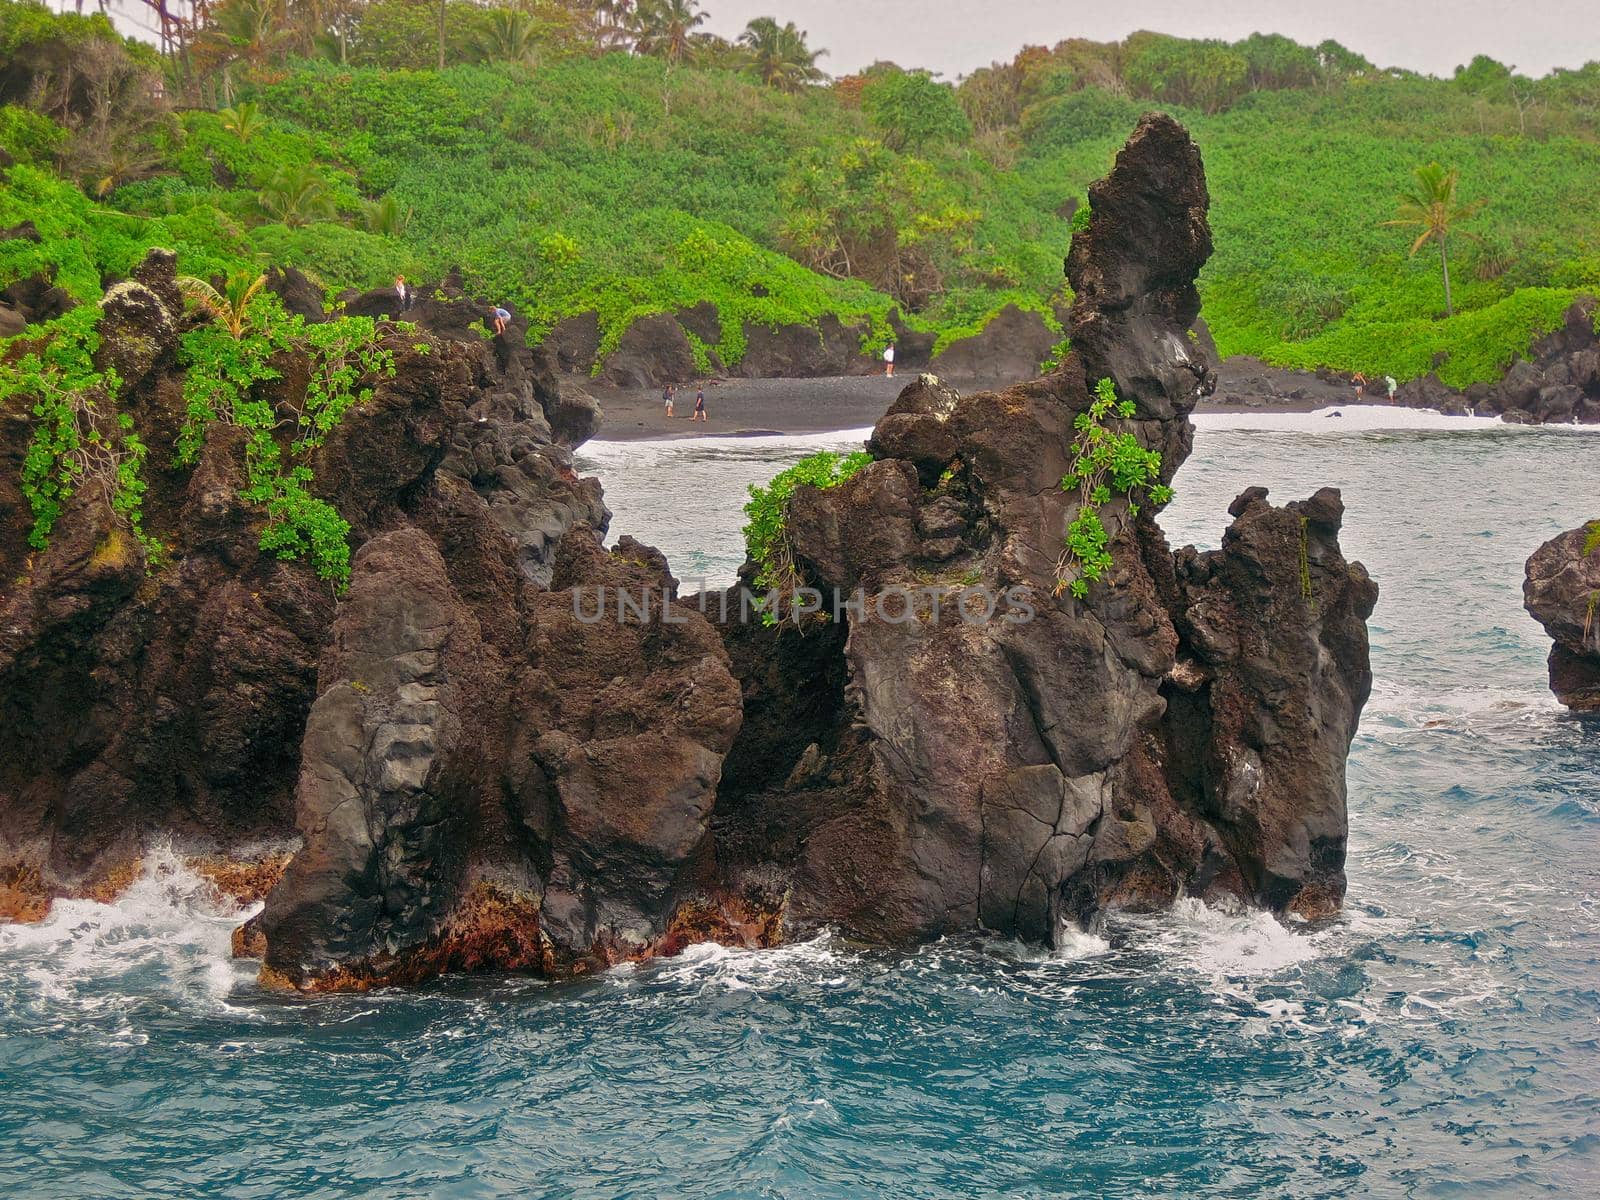 Visitors Explore the Lava Cliffs at Waianapanapa State Park in Hana, Hawaii on the island of Maui by markvandam